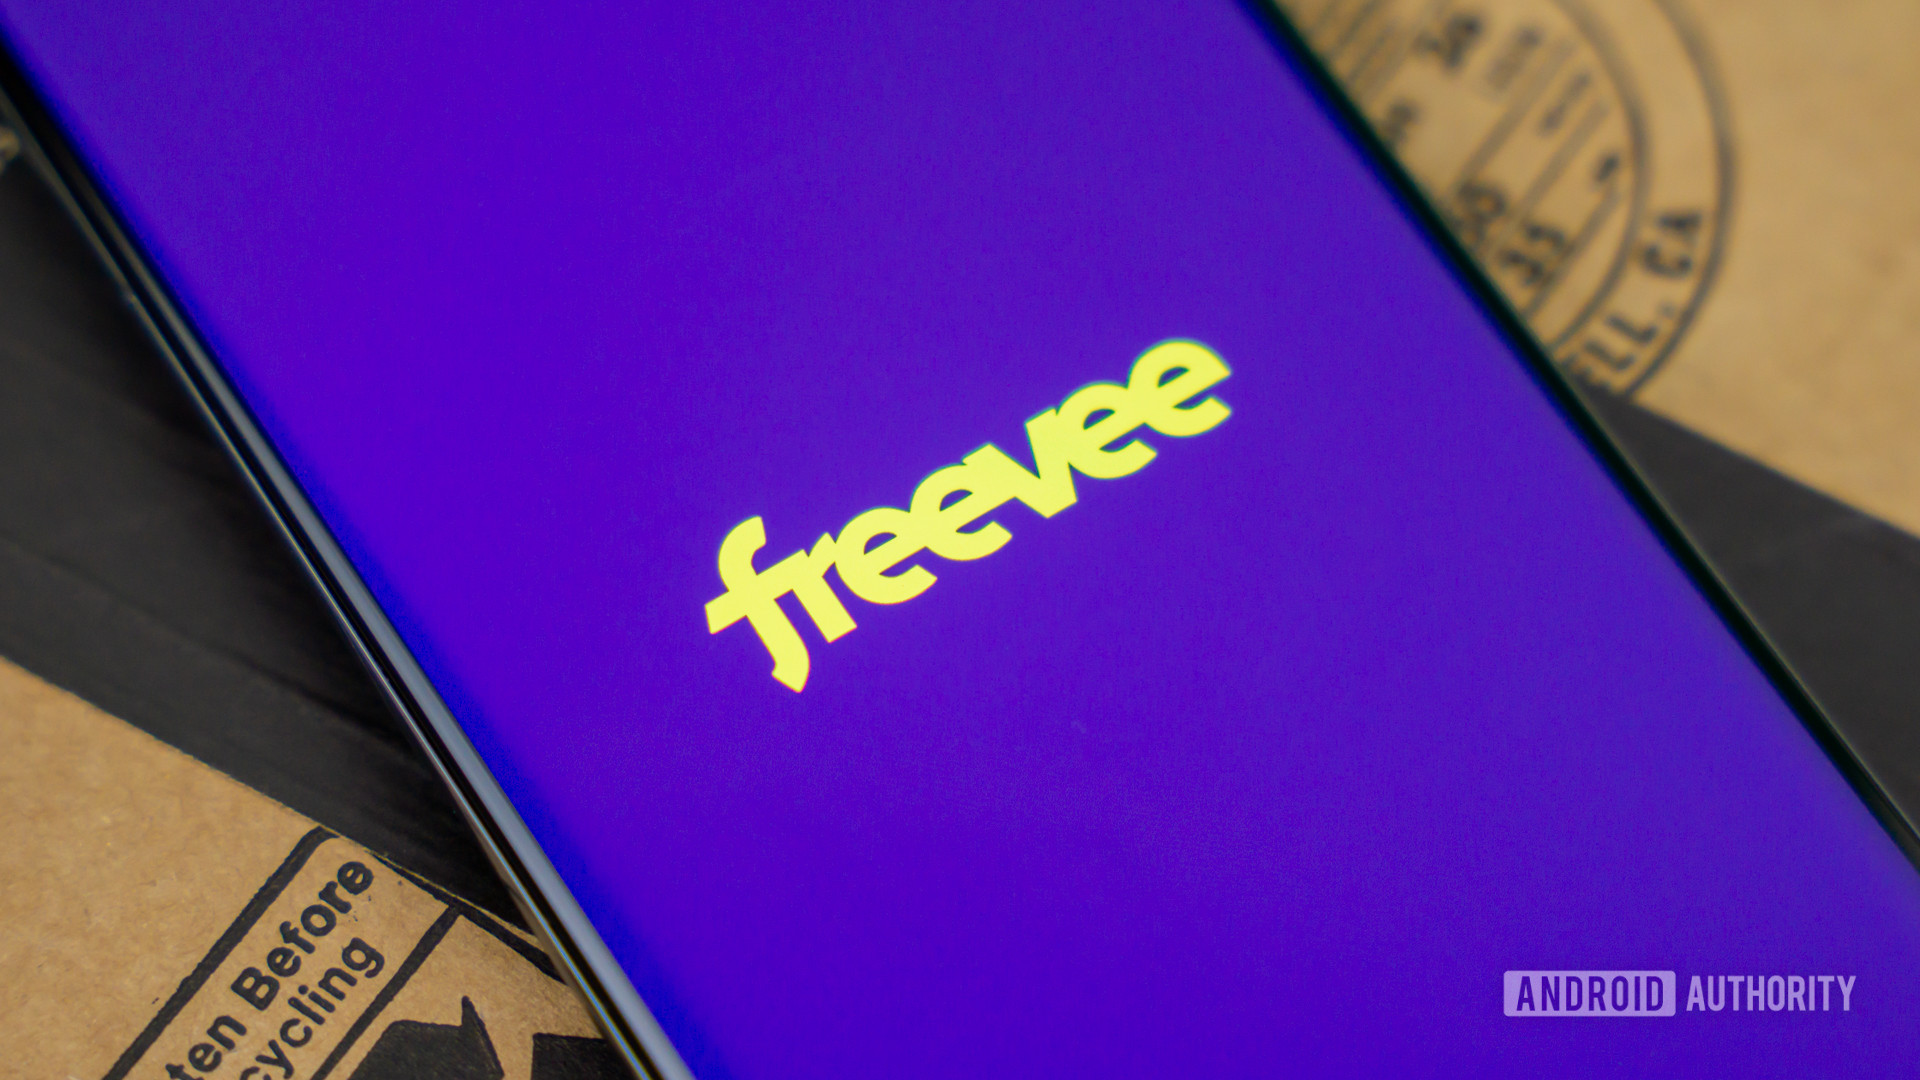 Stock photo of Freevee by Amazon logo on phone next to box 3